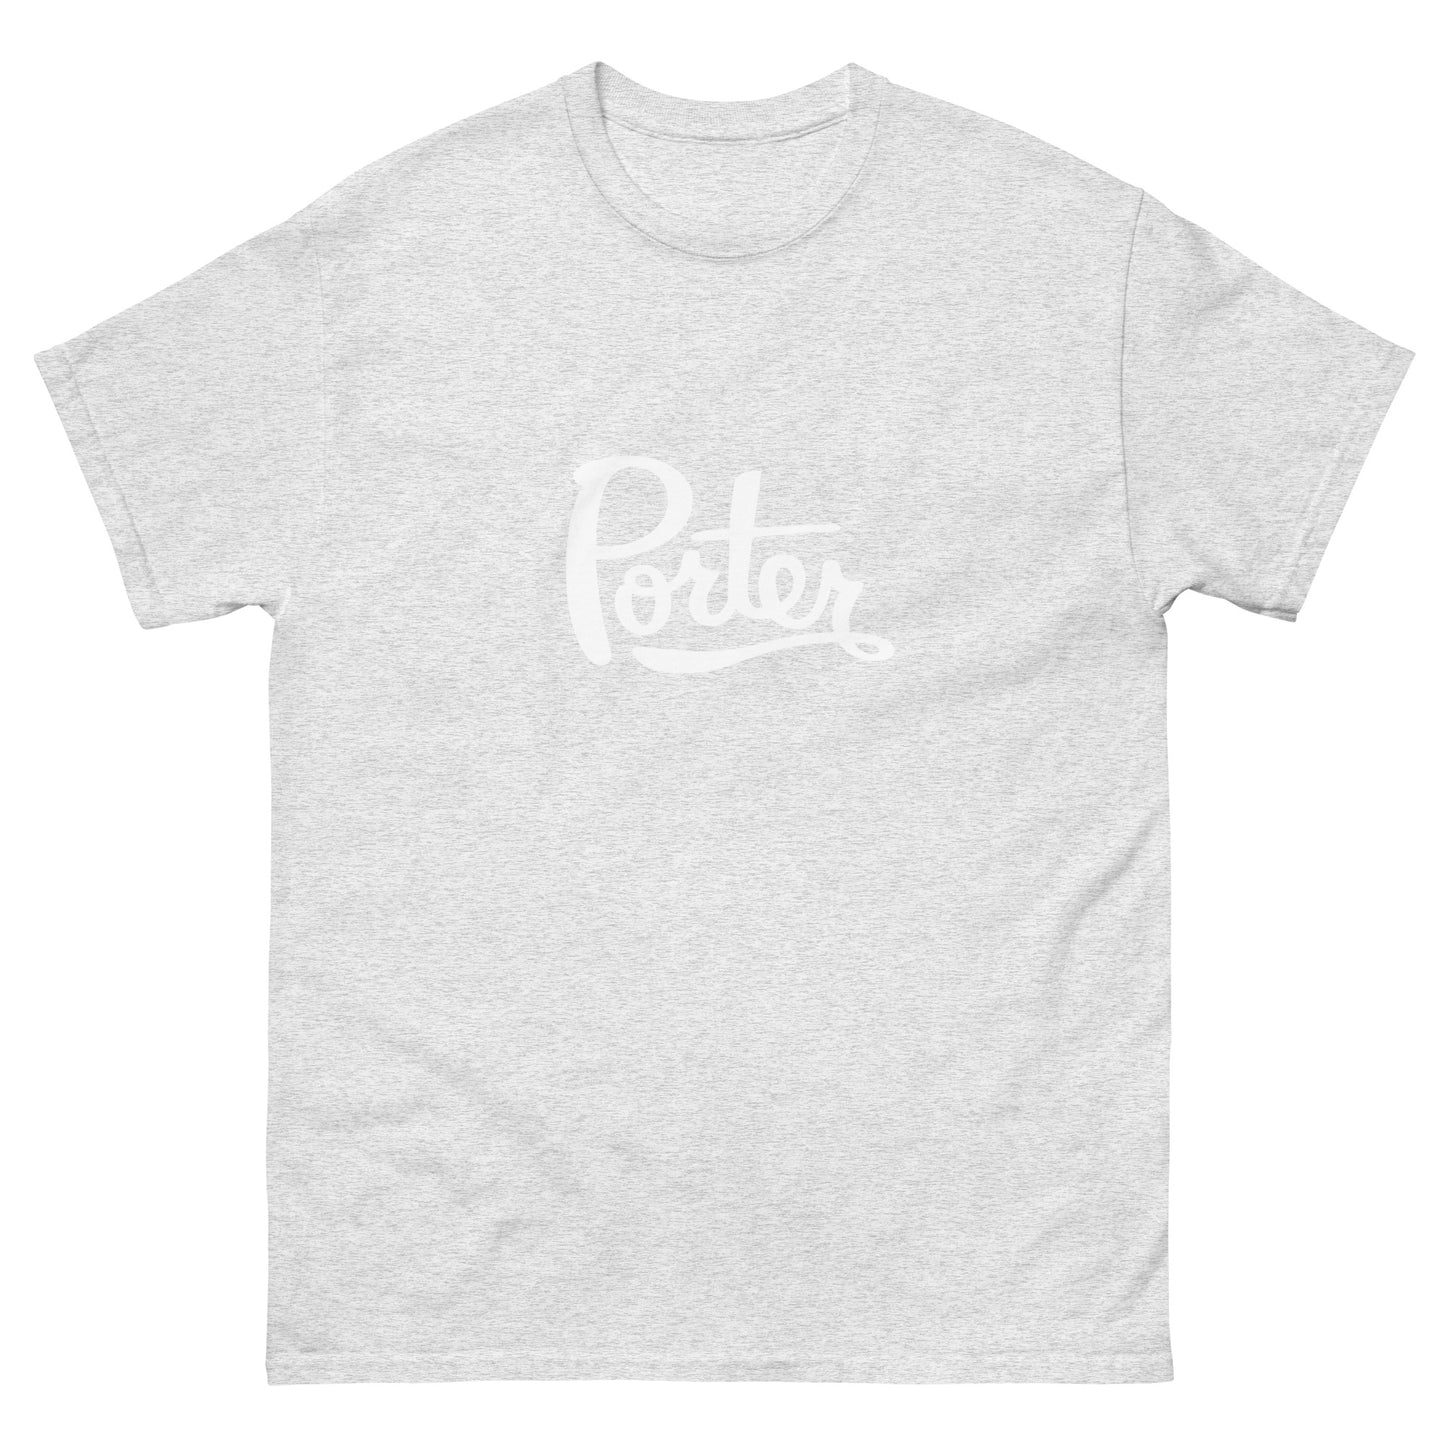 Porter Logo Shirt